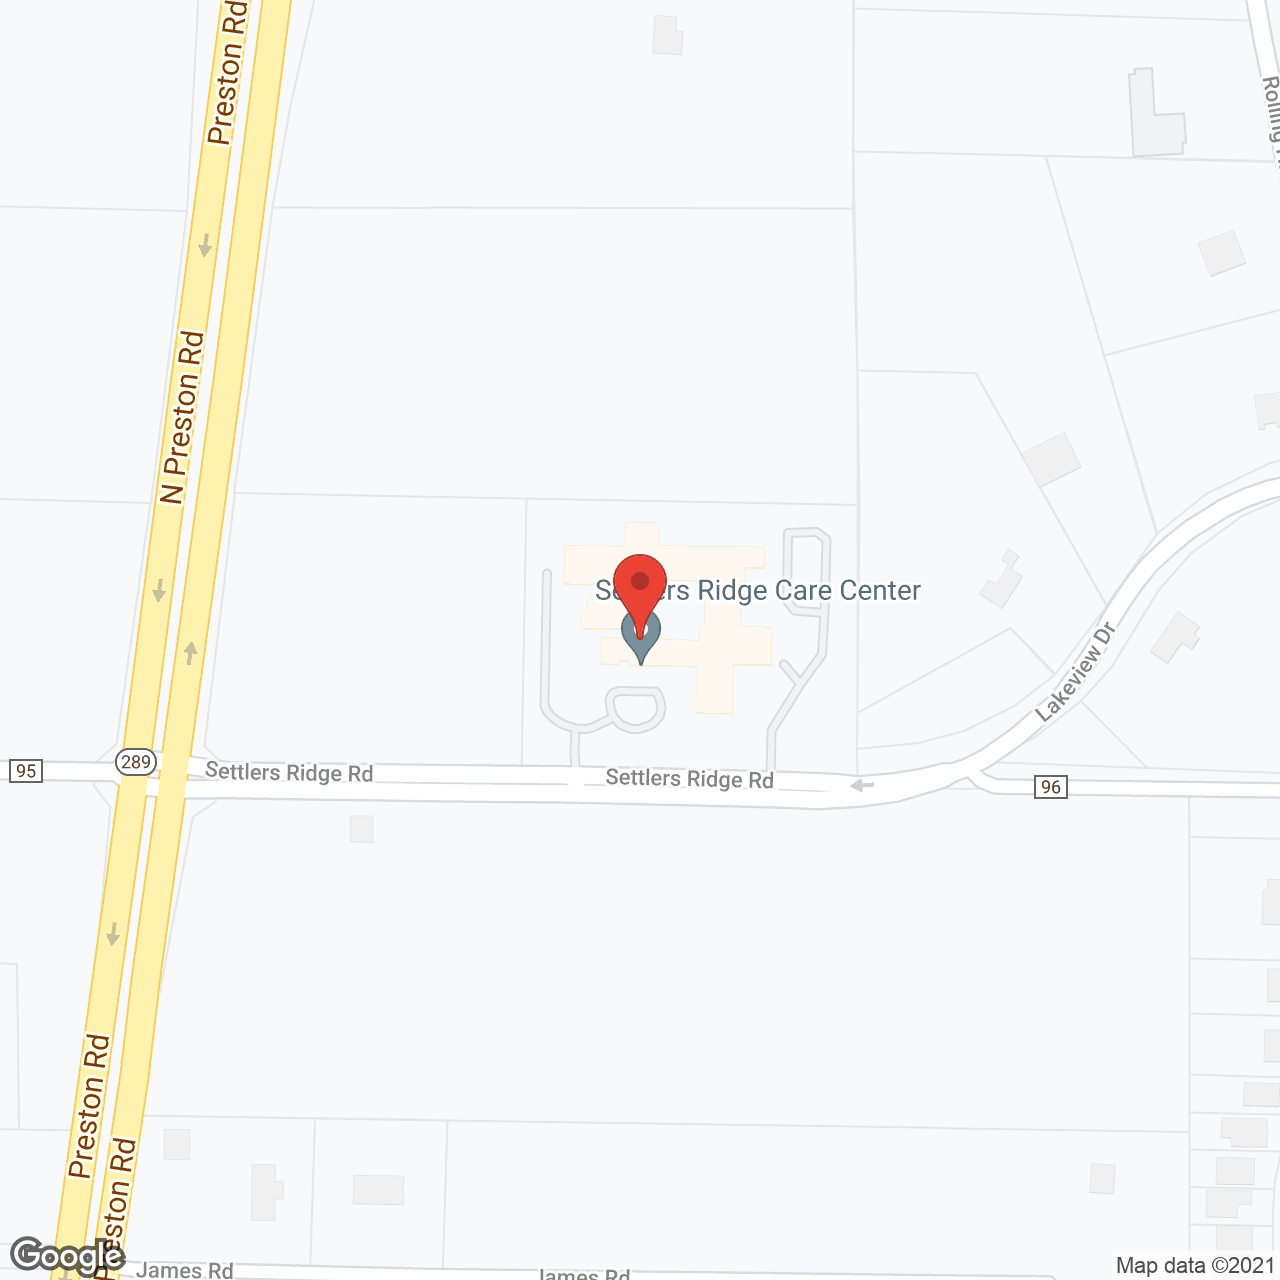 Settlers Ridge Care Center in google map